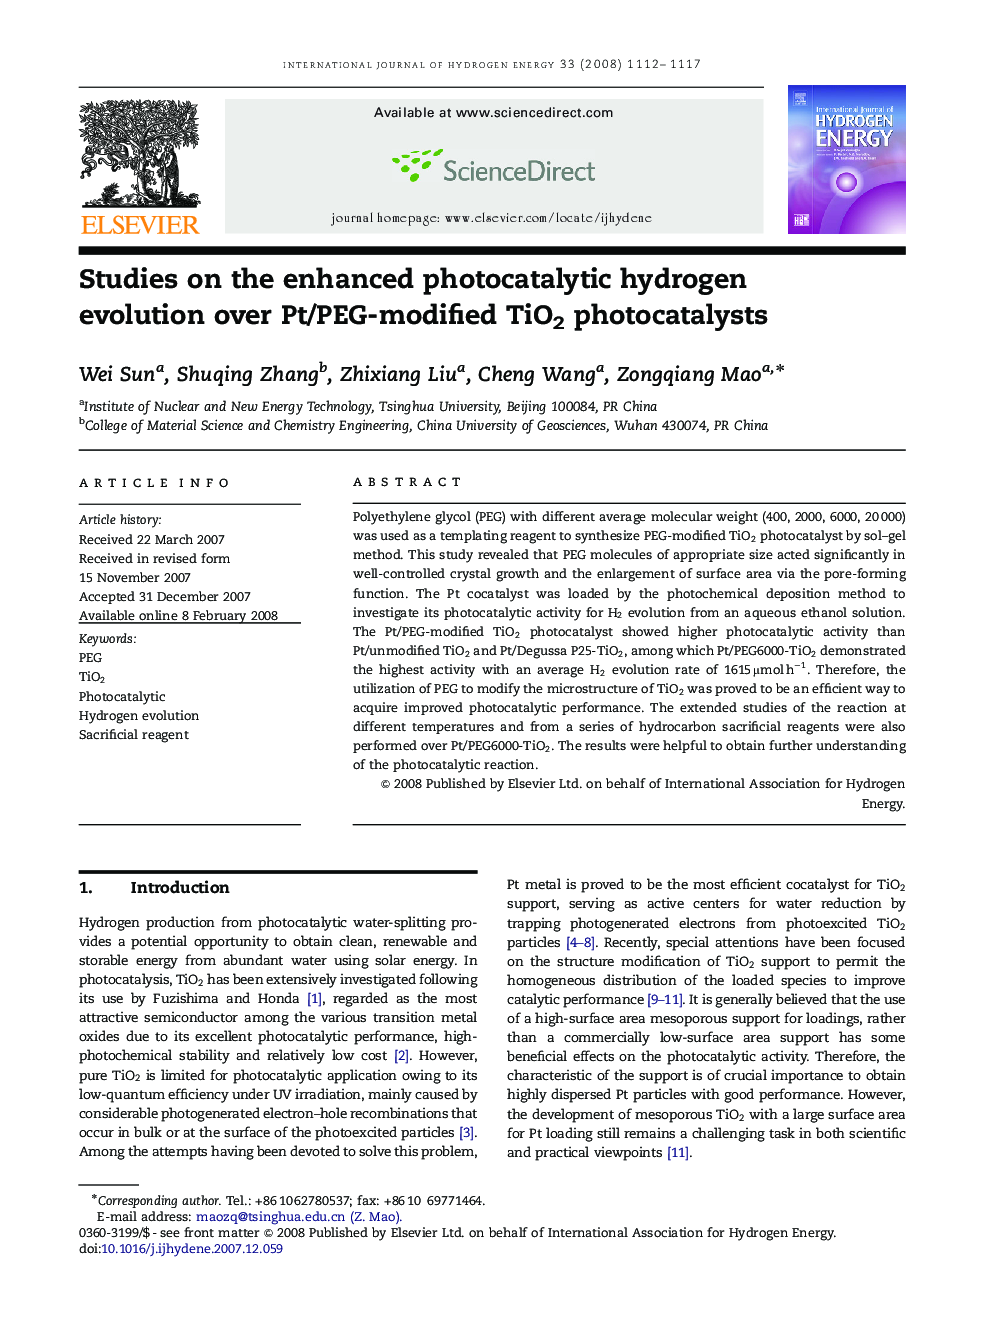 Studies on the enhanced photocatalytic hydrogen evolution over Pt/PEG-modified TiO2 photocatalysts